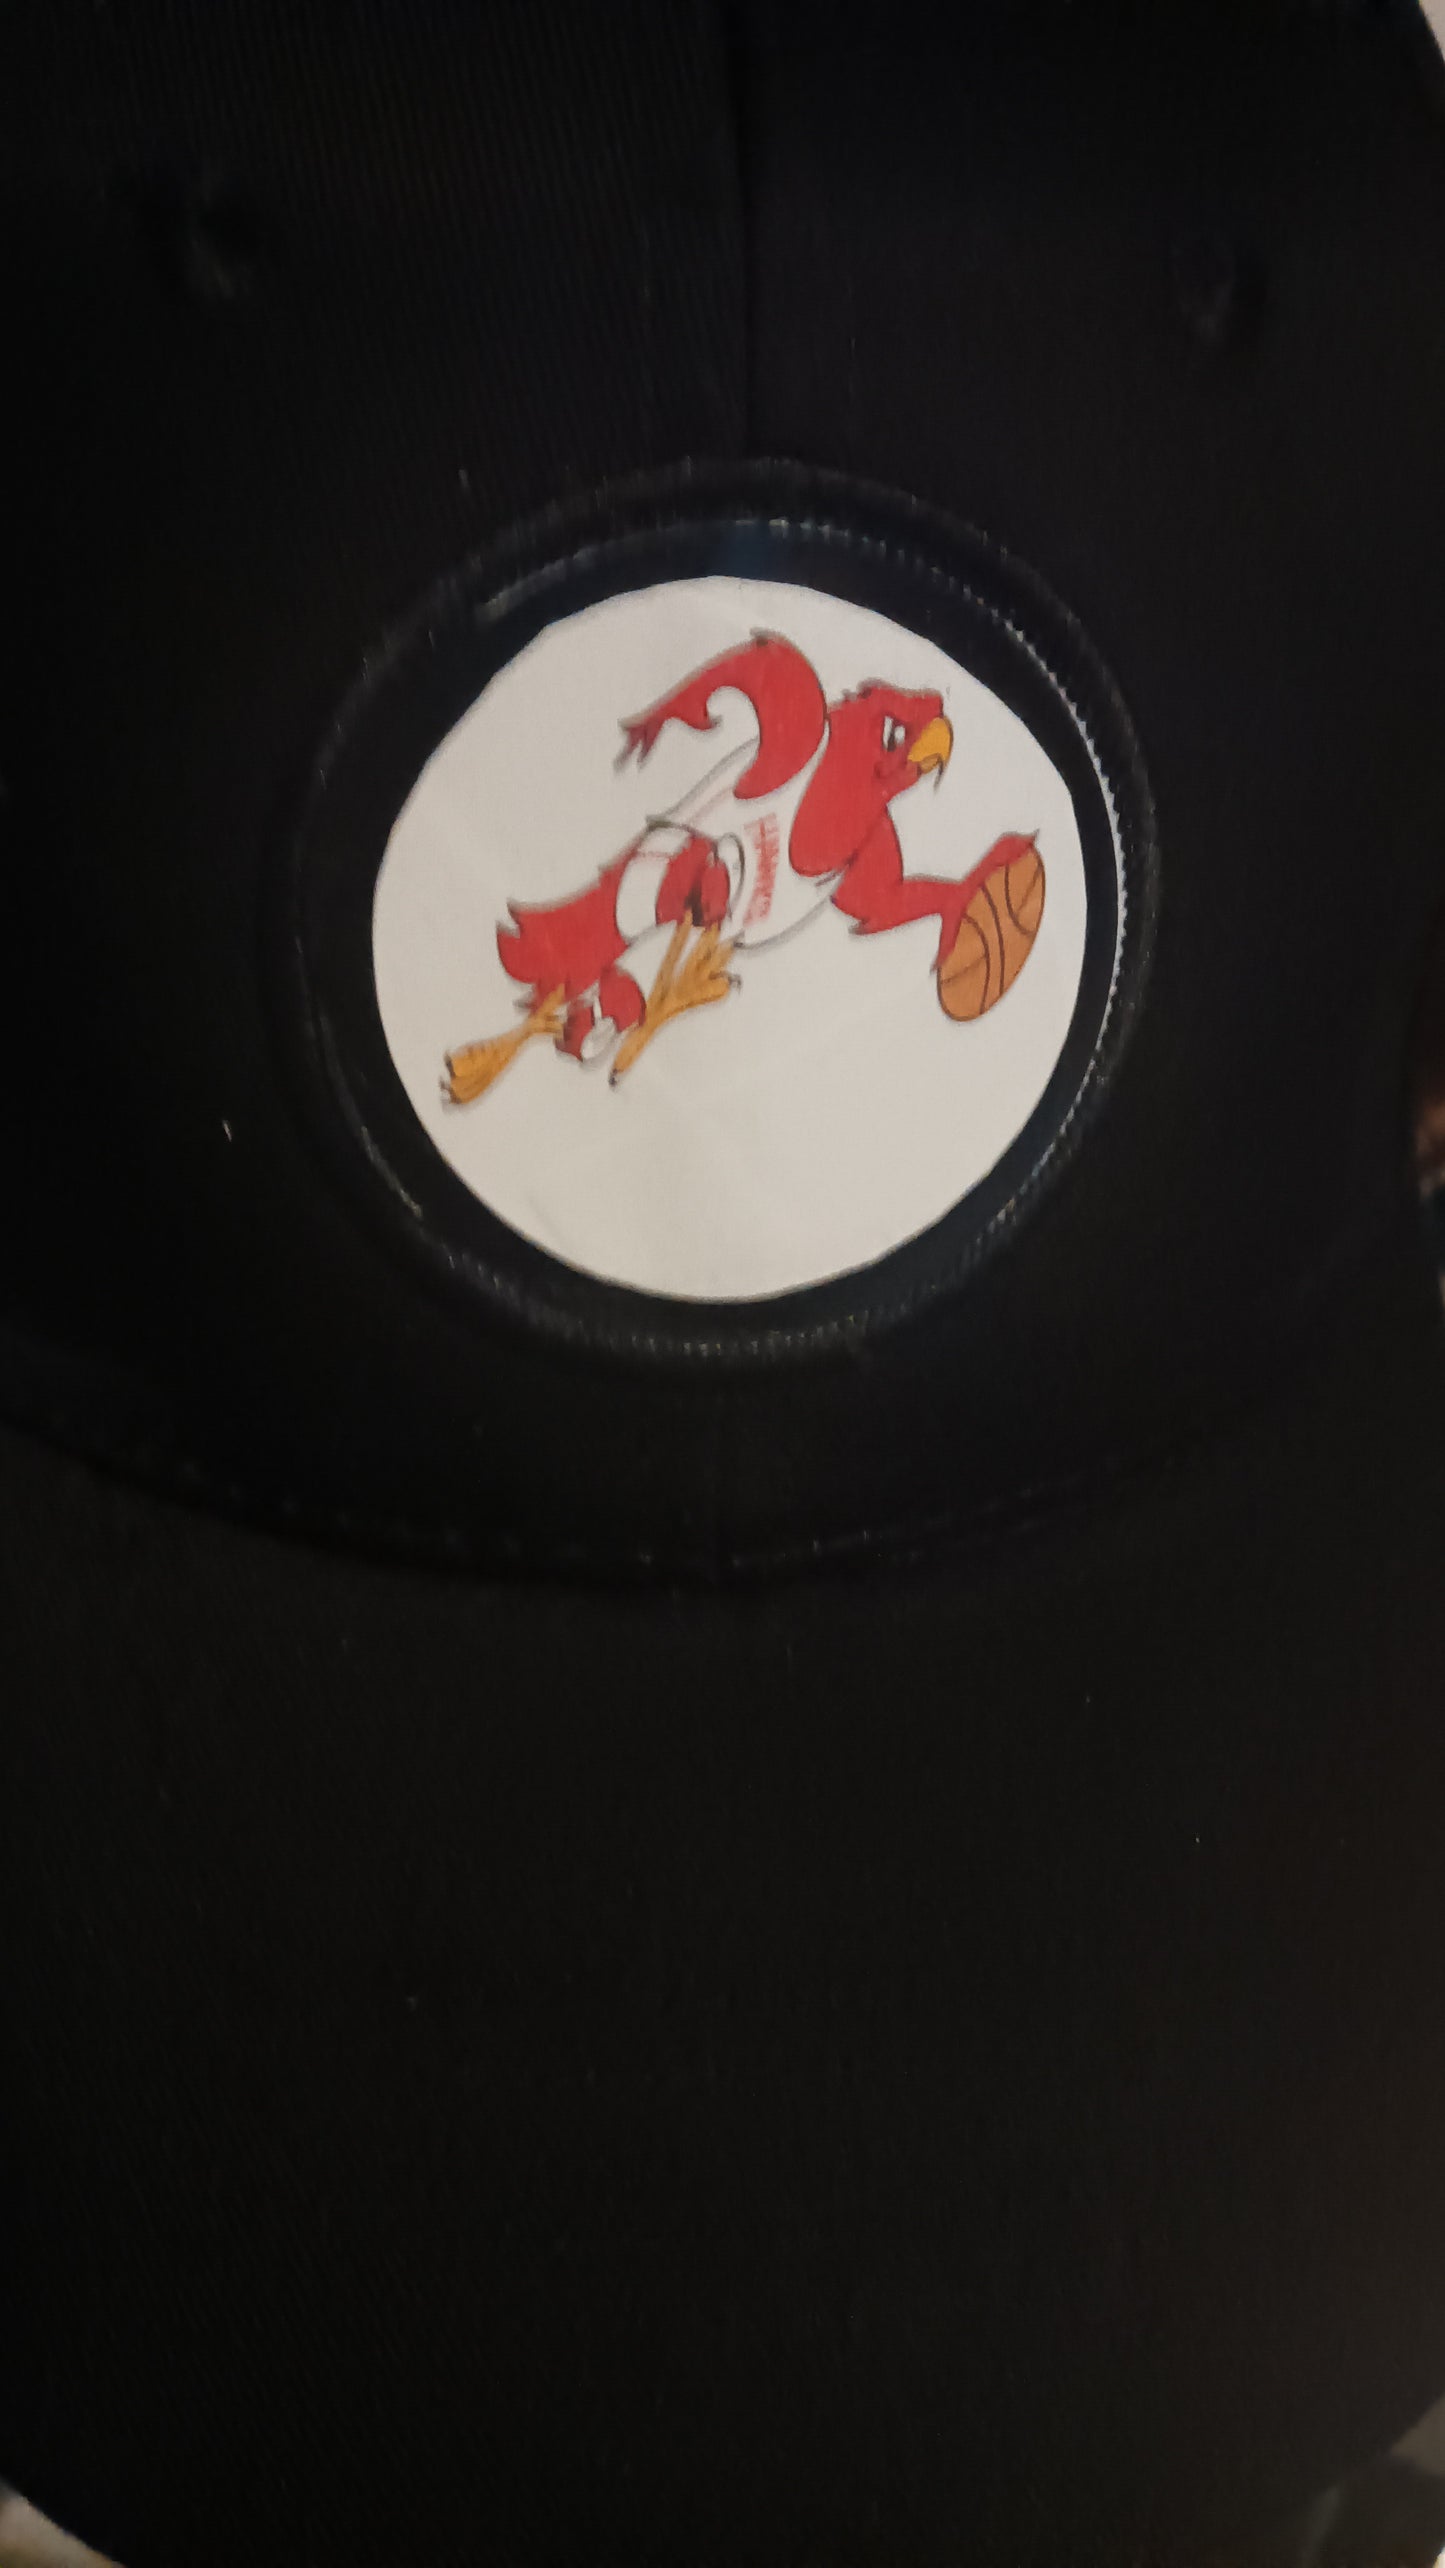 ATL Hawks Unisex Adjustable Baseball Cap for Adults/ Teens